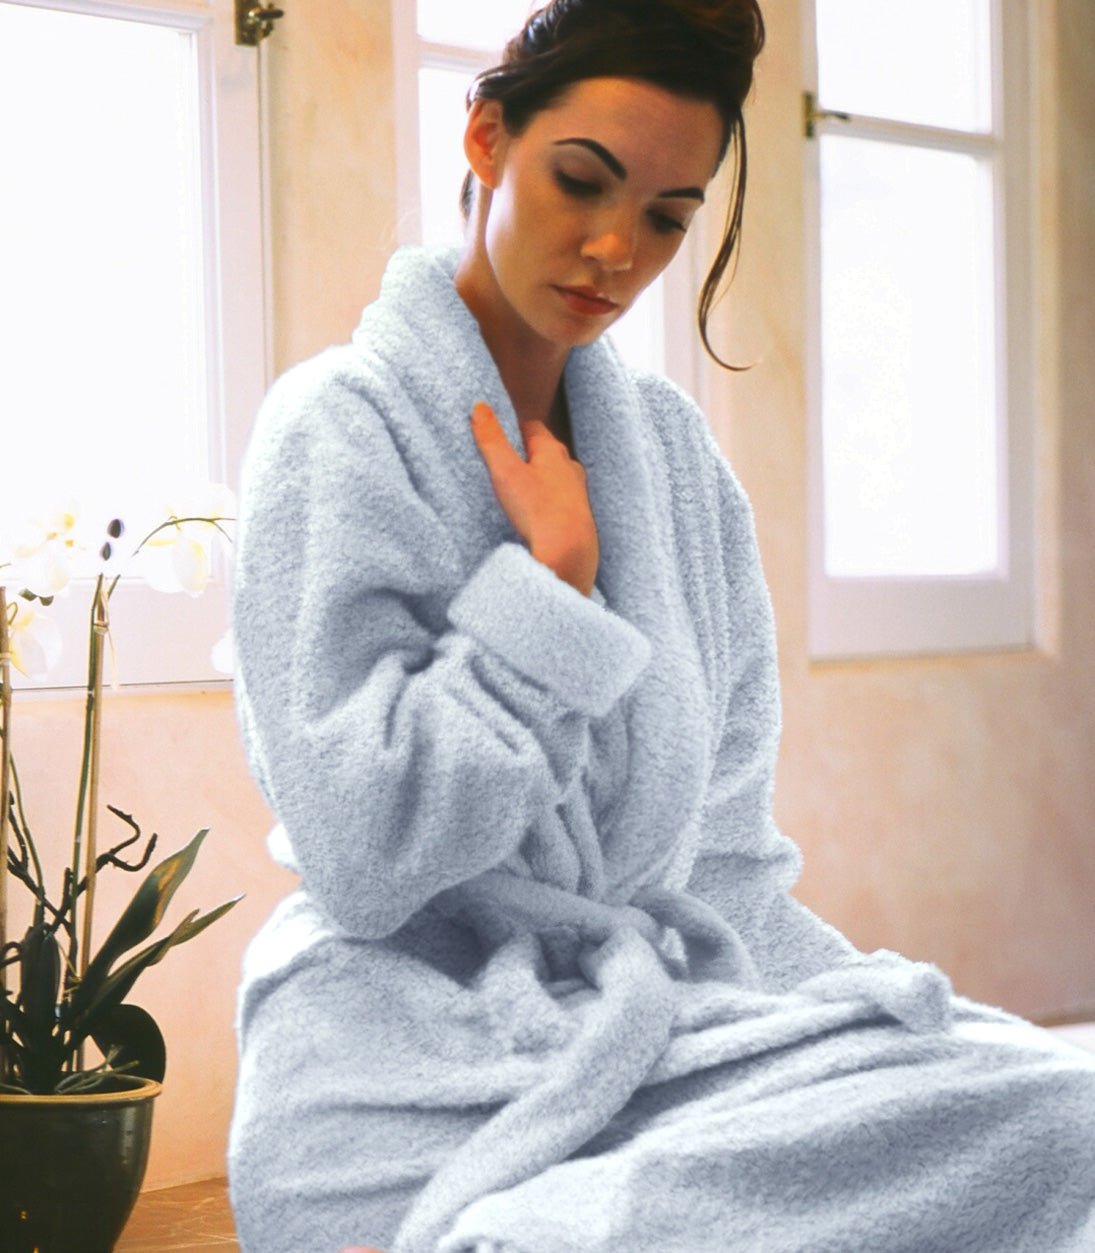 16 Best Bathrobes For Women: Cute, Comfy Robes